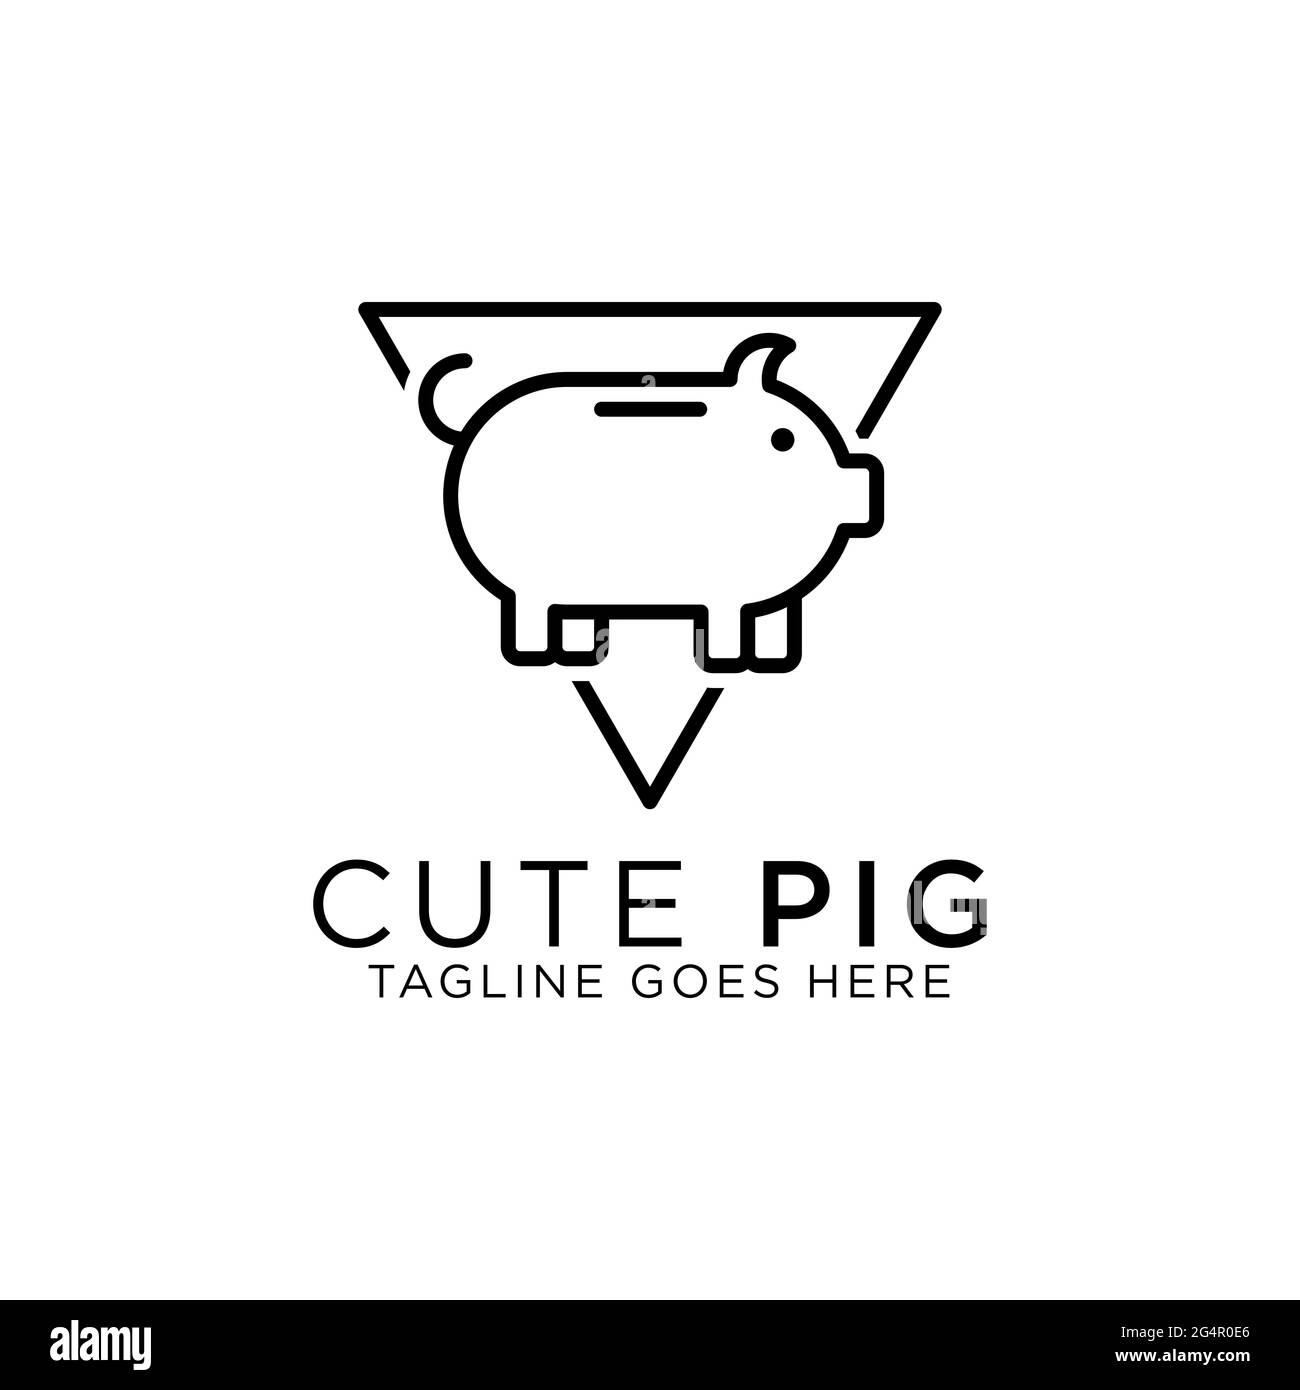 cute pig line art logo design vector, best for pet or animal logo inspirations Stock Vector